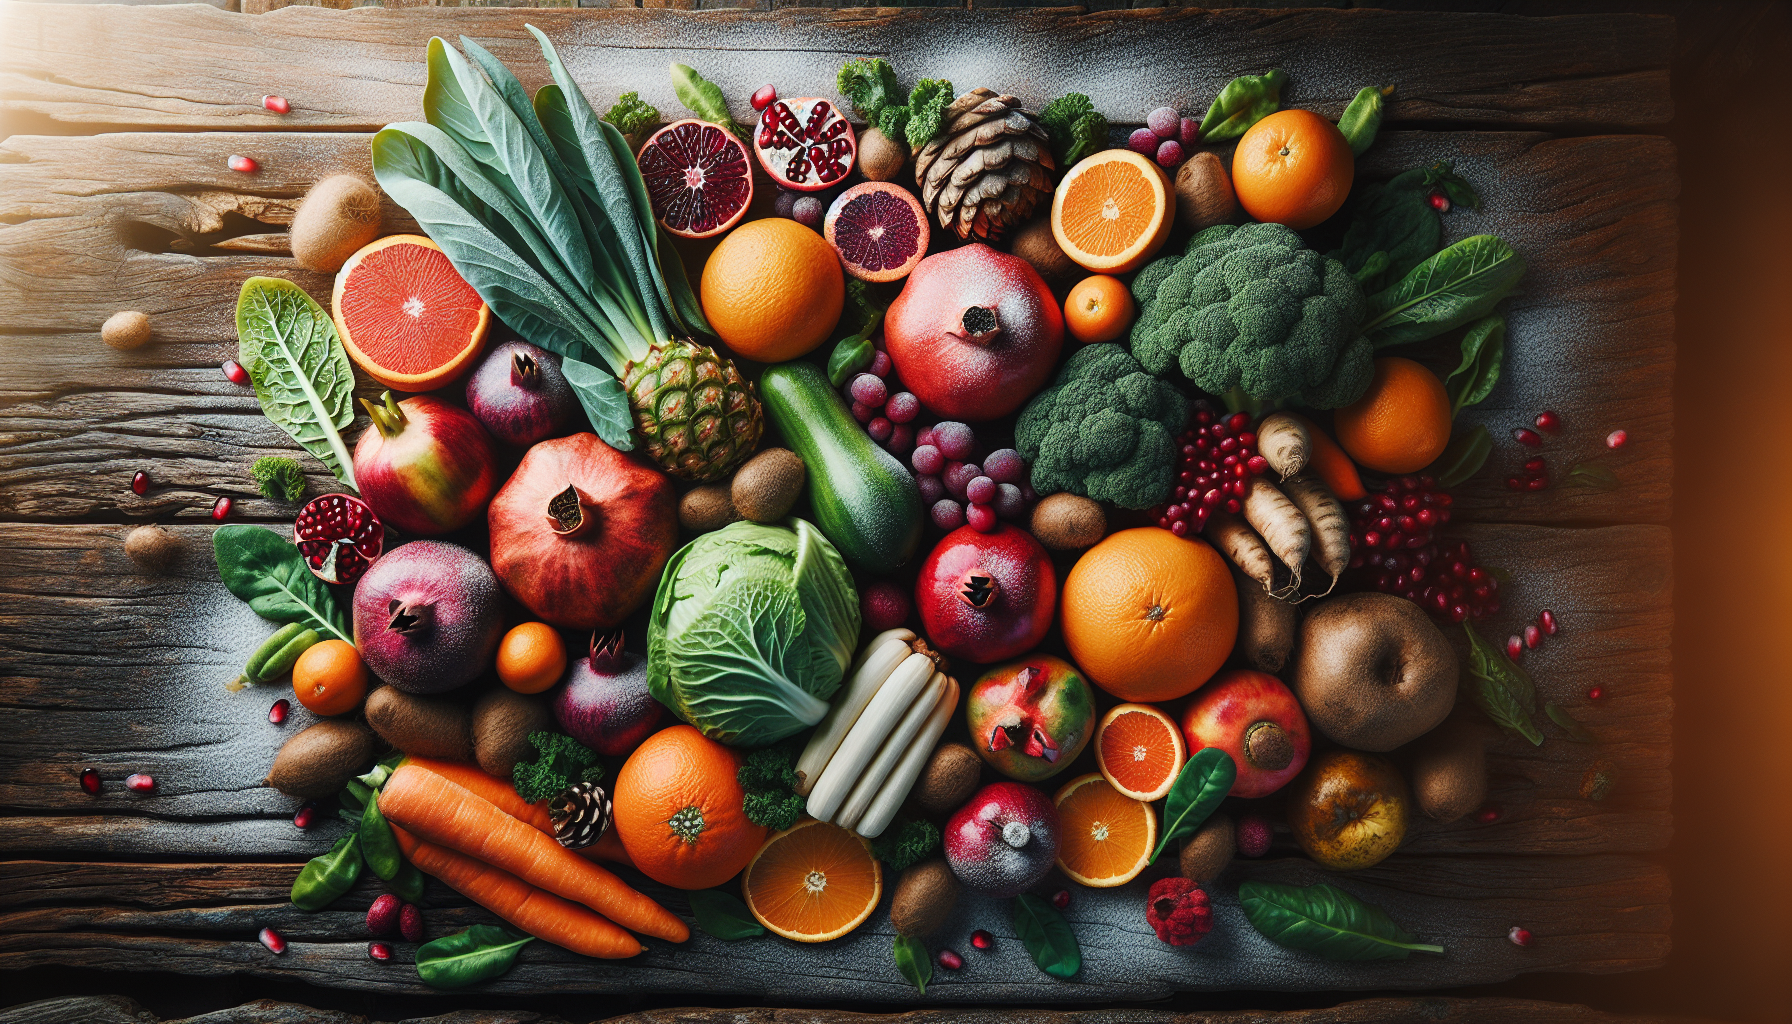 Balanced diet with seasonal produce